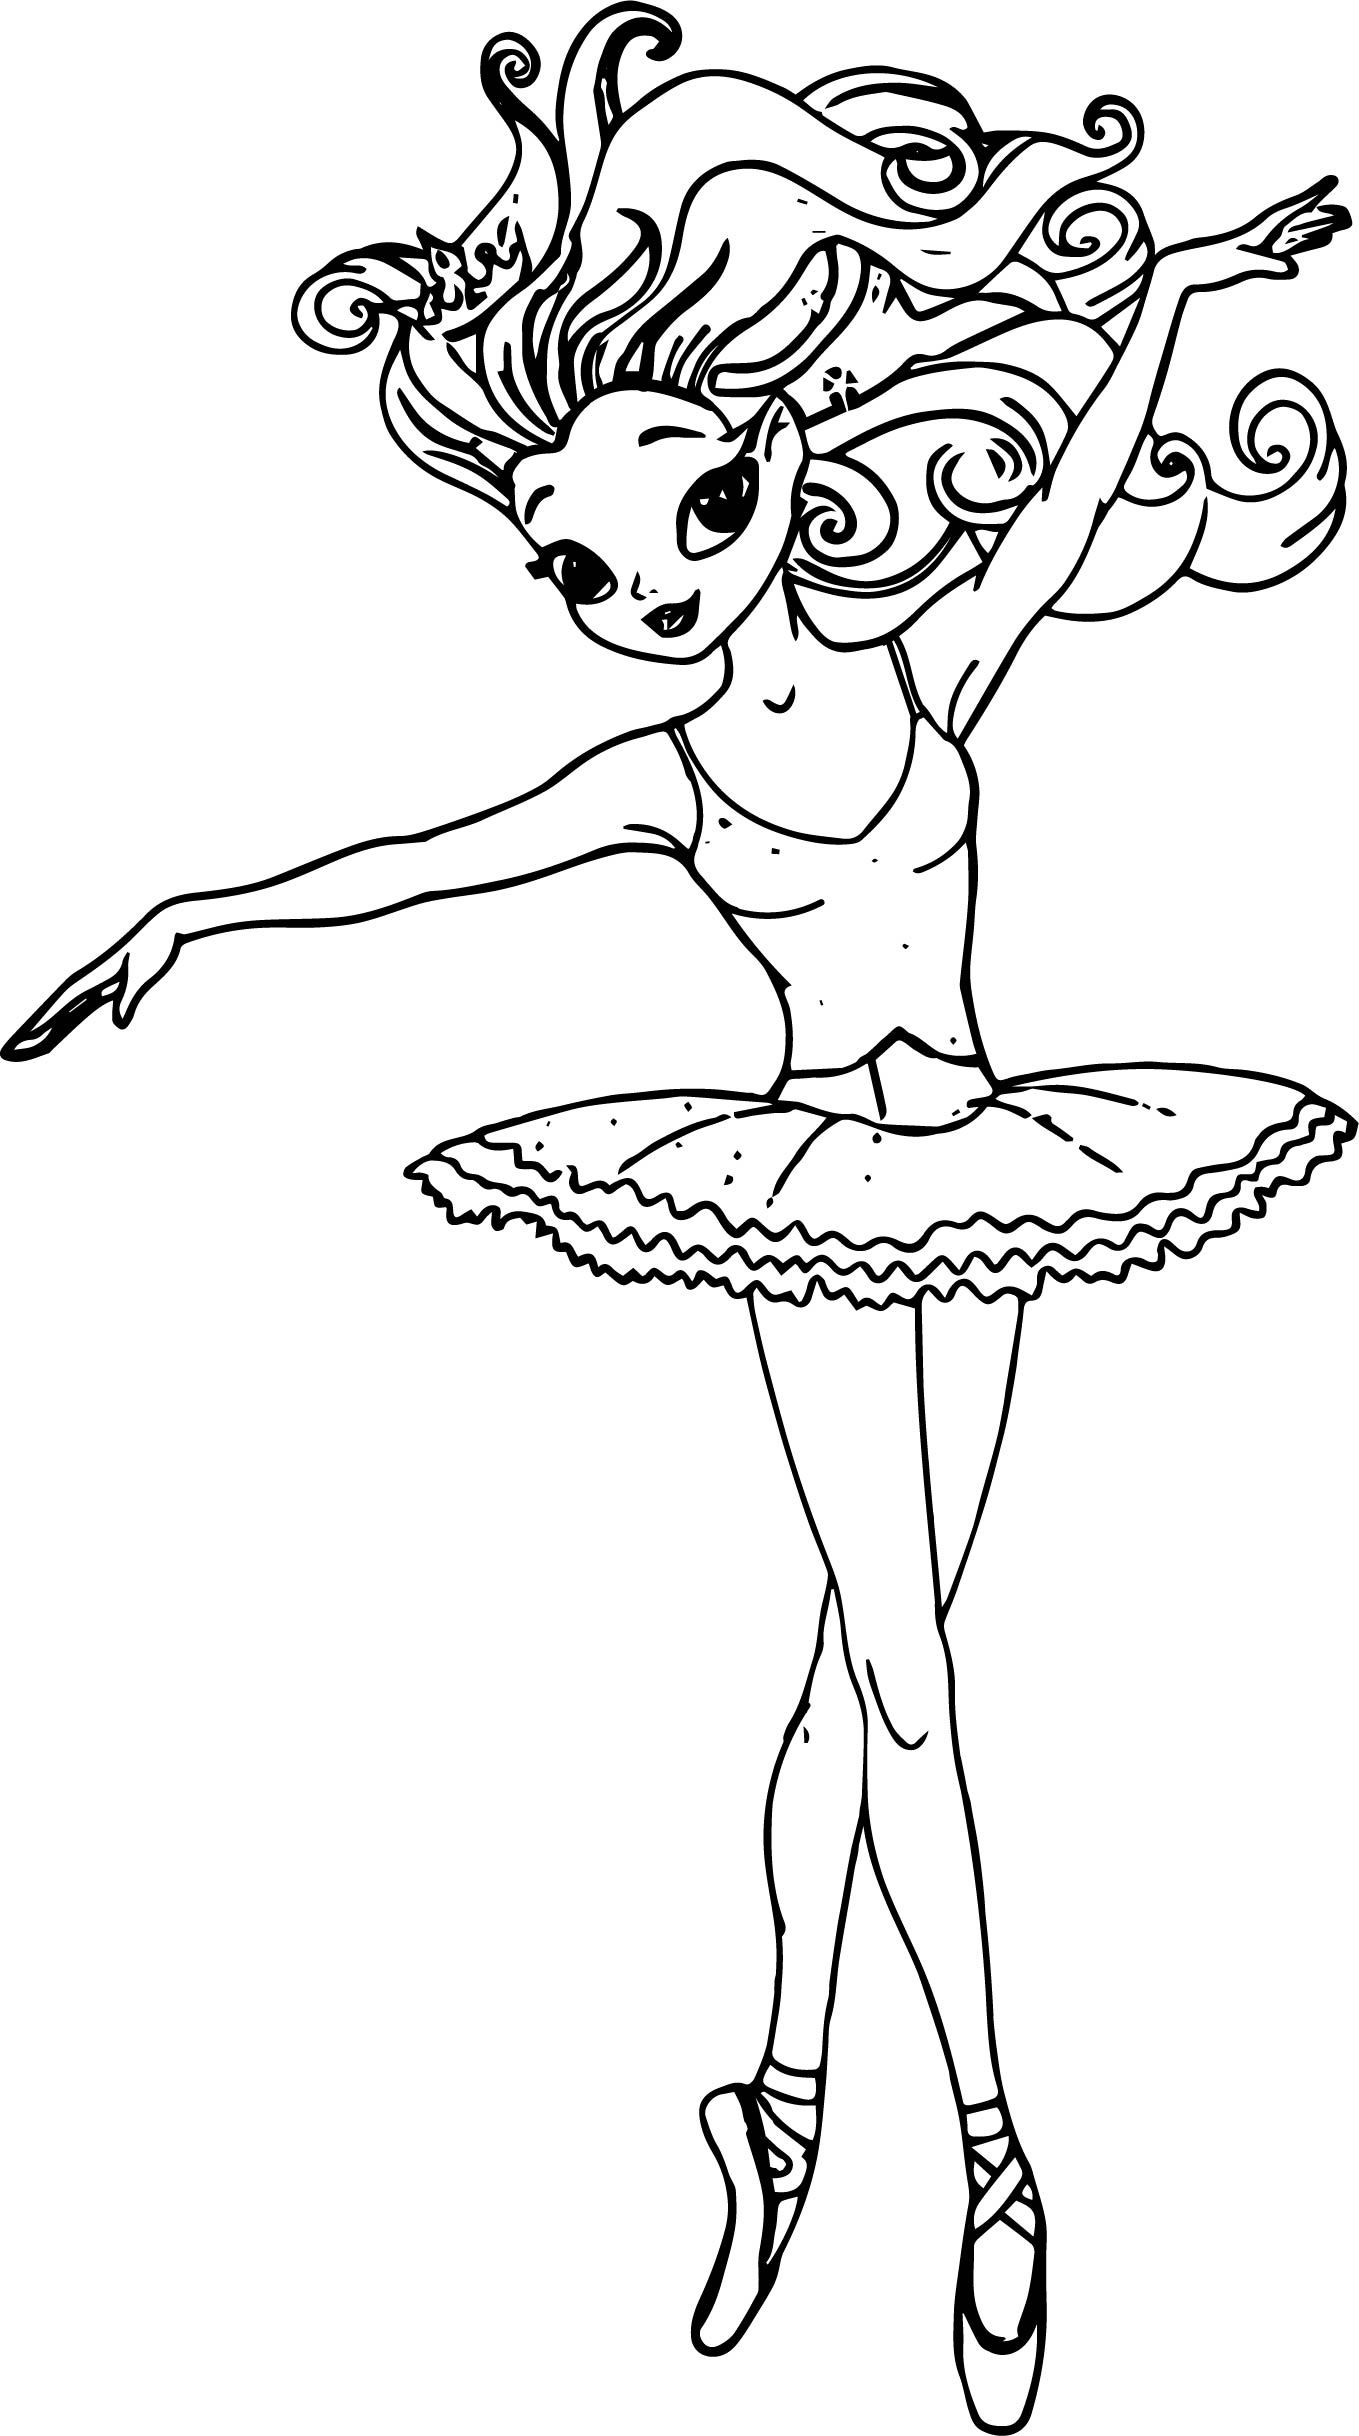 Princess Ballerina Coloring Pages at GetColorings.com | Free printable